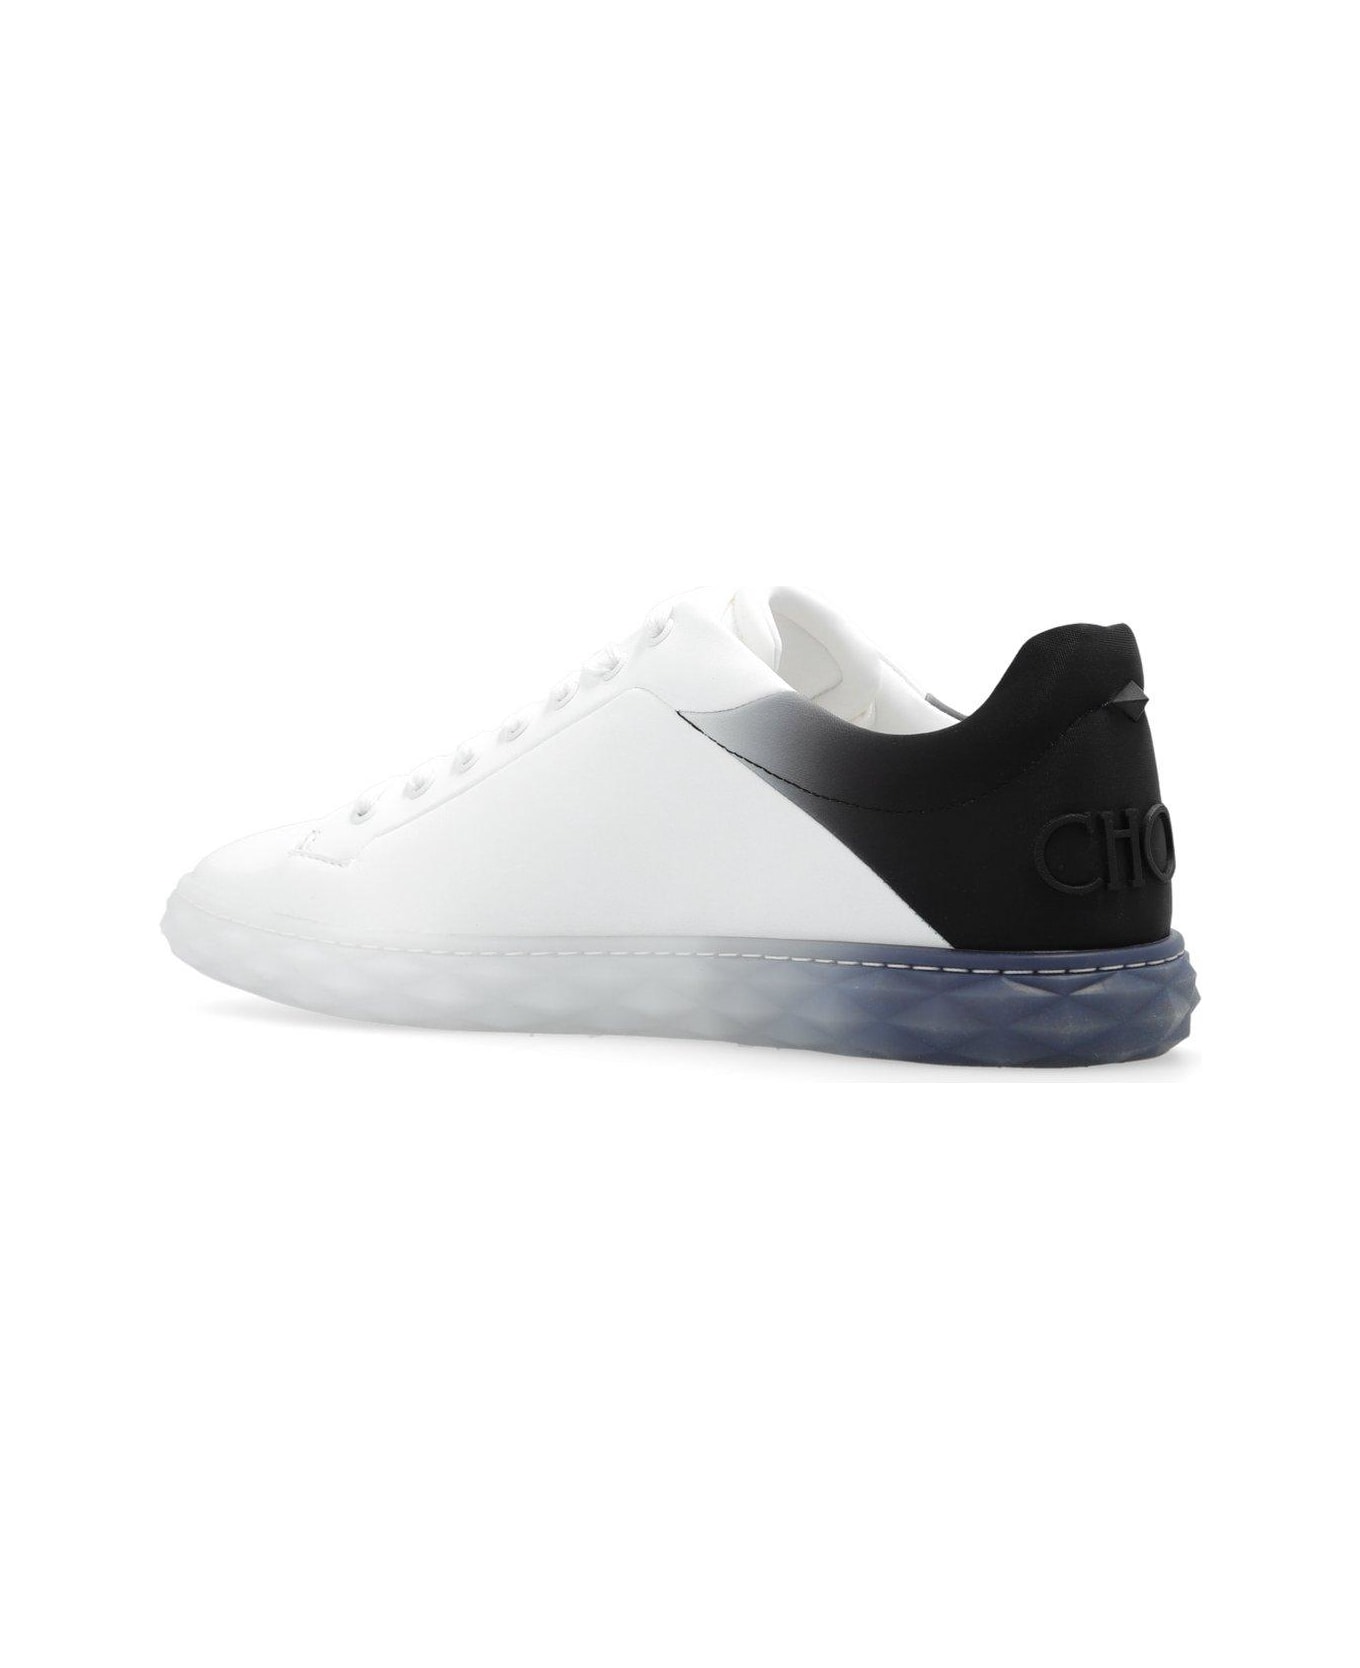 Jimmy Choo Diamond Light/m Ii Ombr Ffect Lace-up Sneakers - WHITE/BLACK